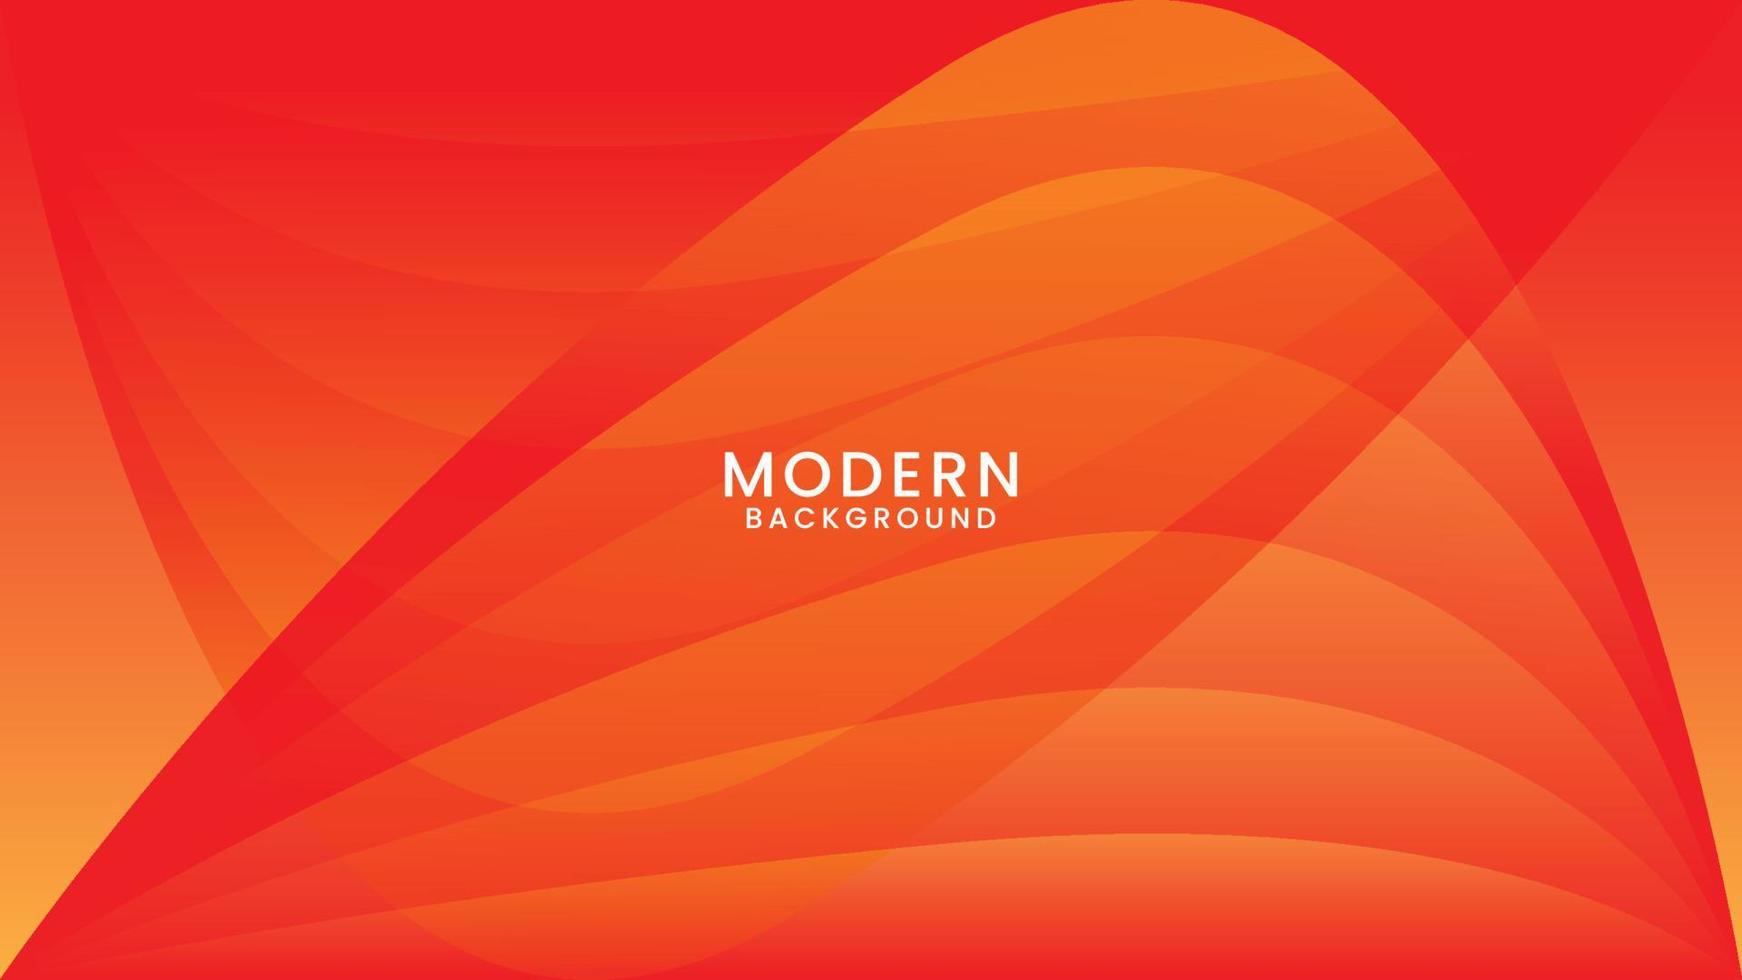 Modern Background Design Template vector